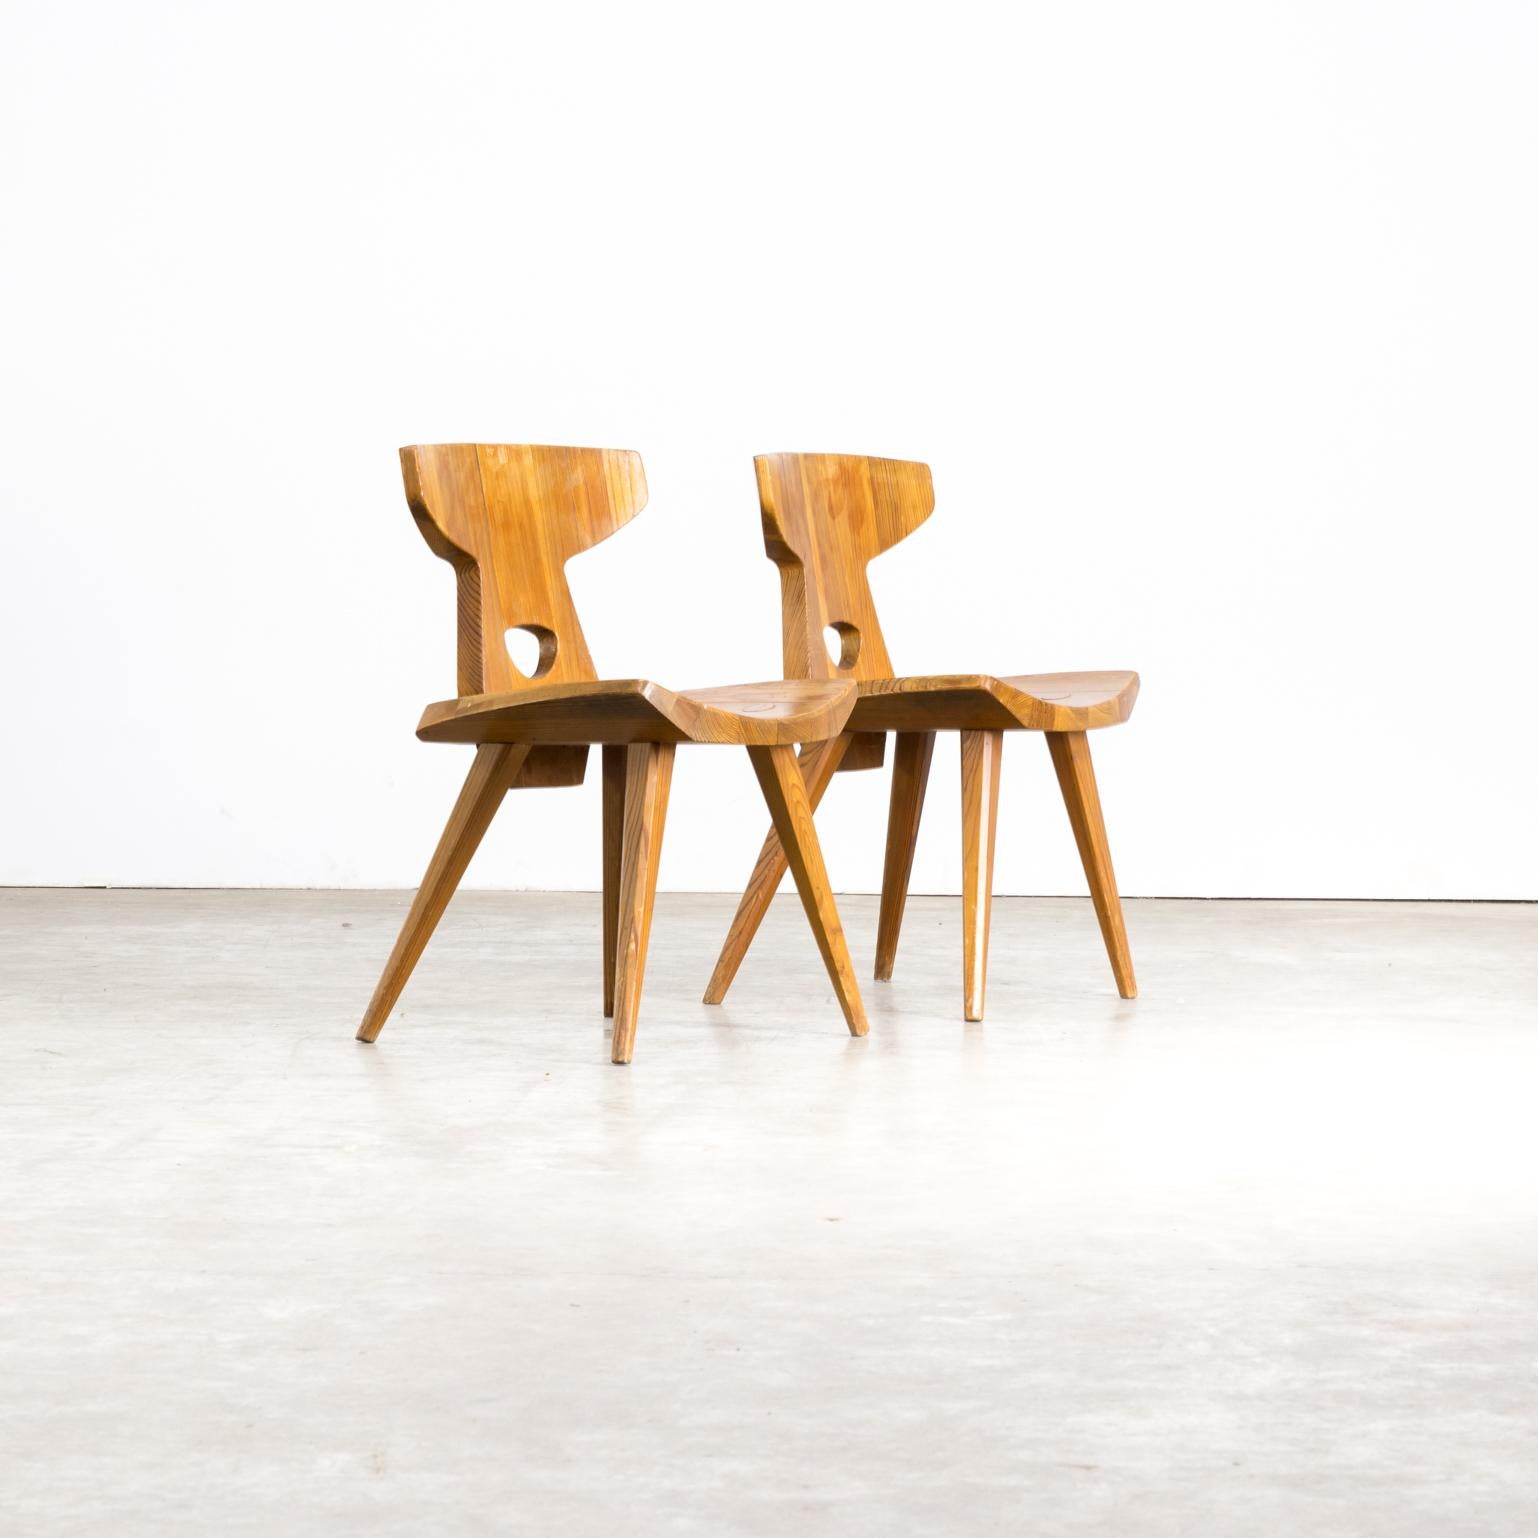 Mid-20th Century 1960s Jacob Kielland-Brandt Dining Chairs for I. Christiansen Set of 2